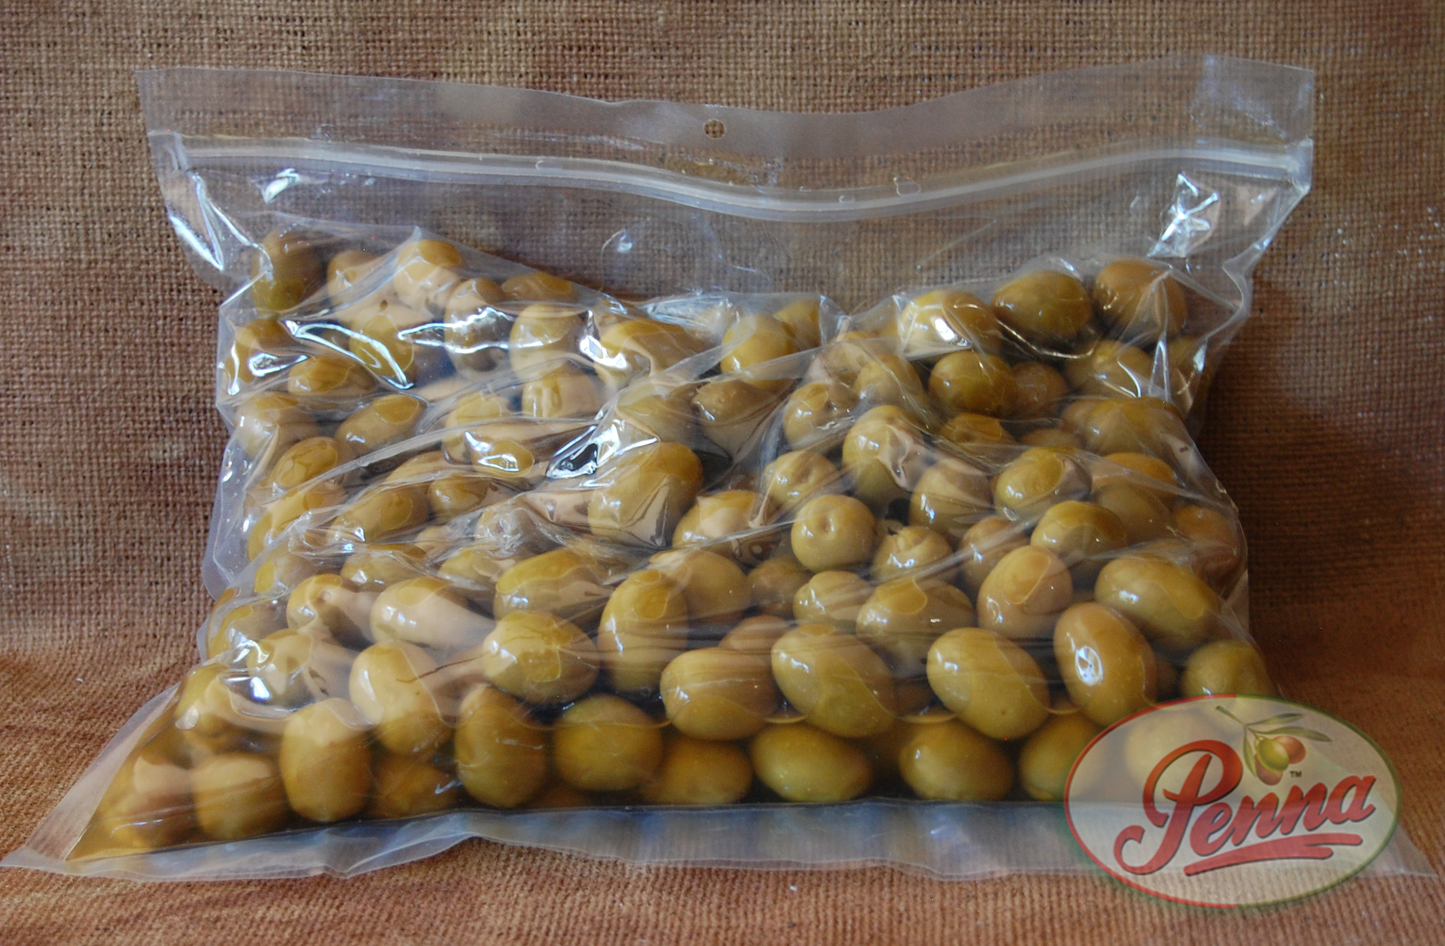 Sicilian Jumbo Whole Olives (two 5lb bags)